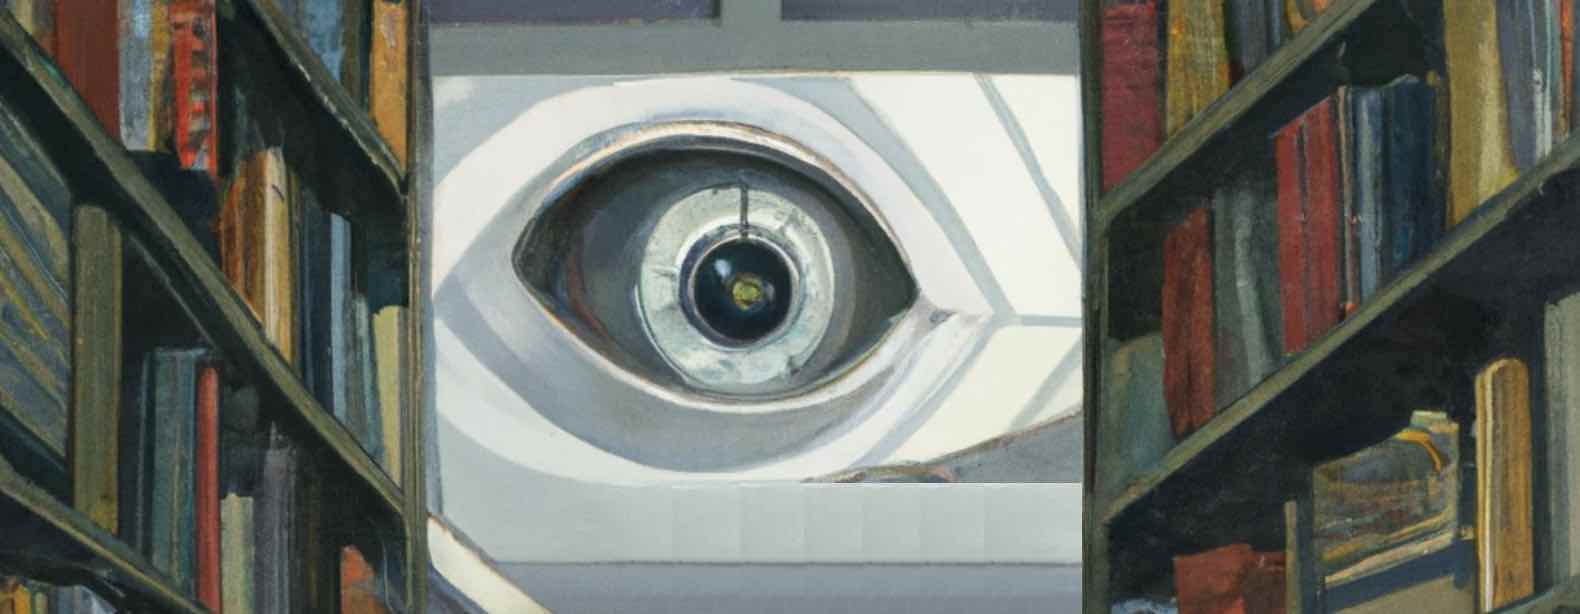 Robot eye